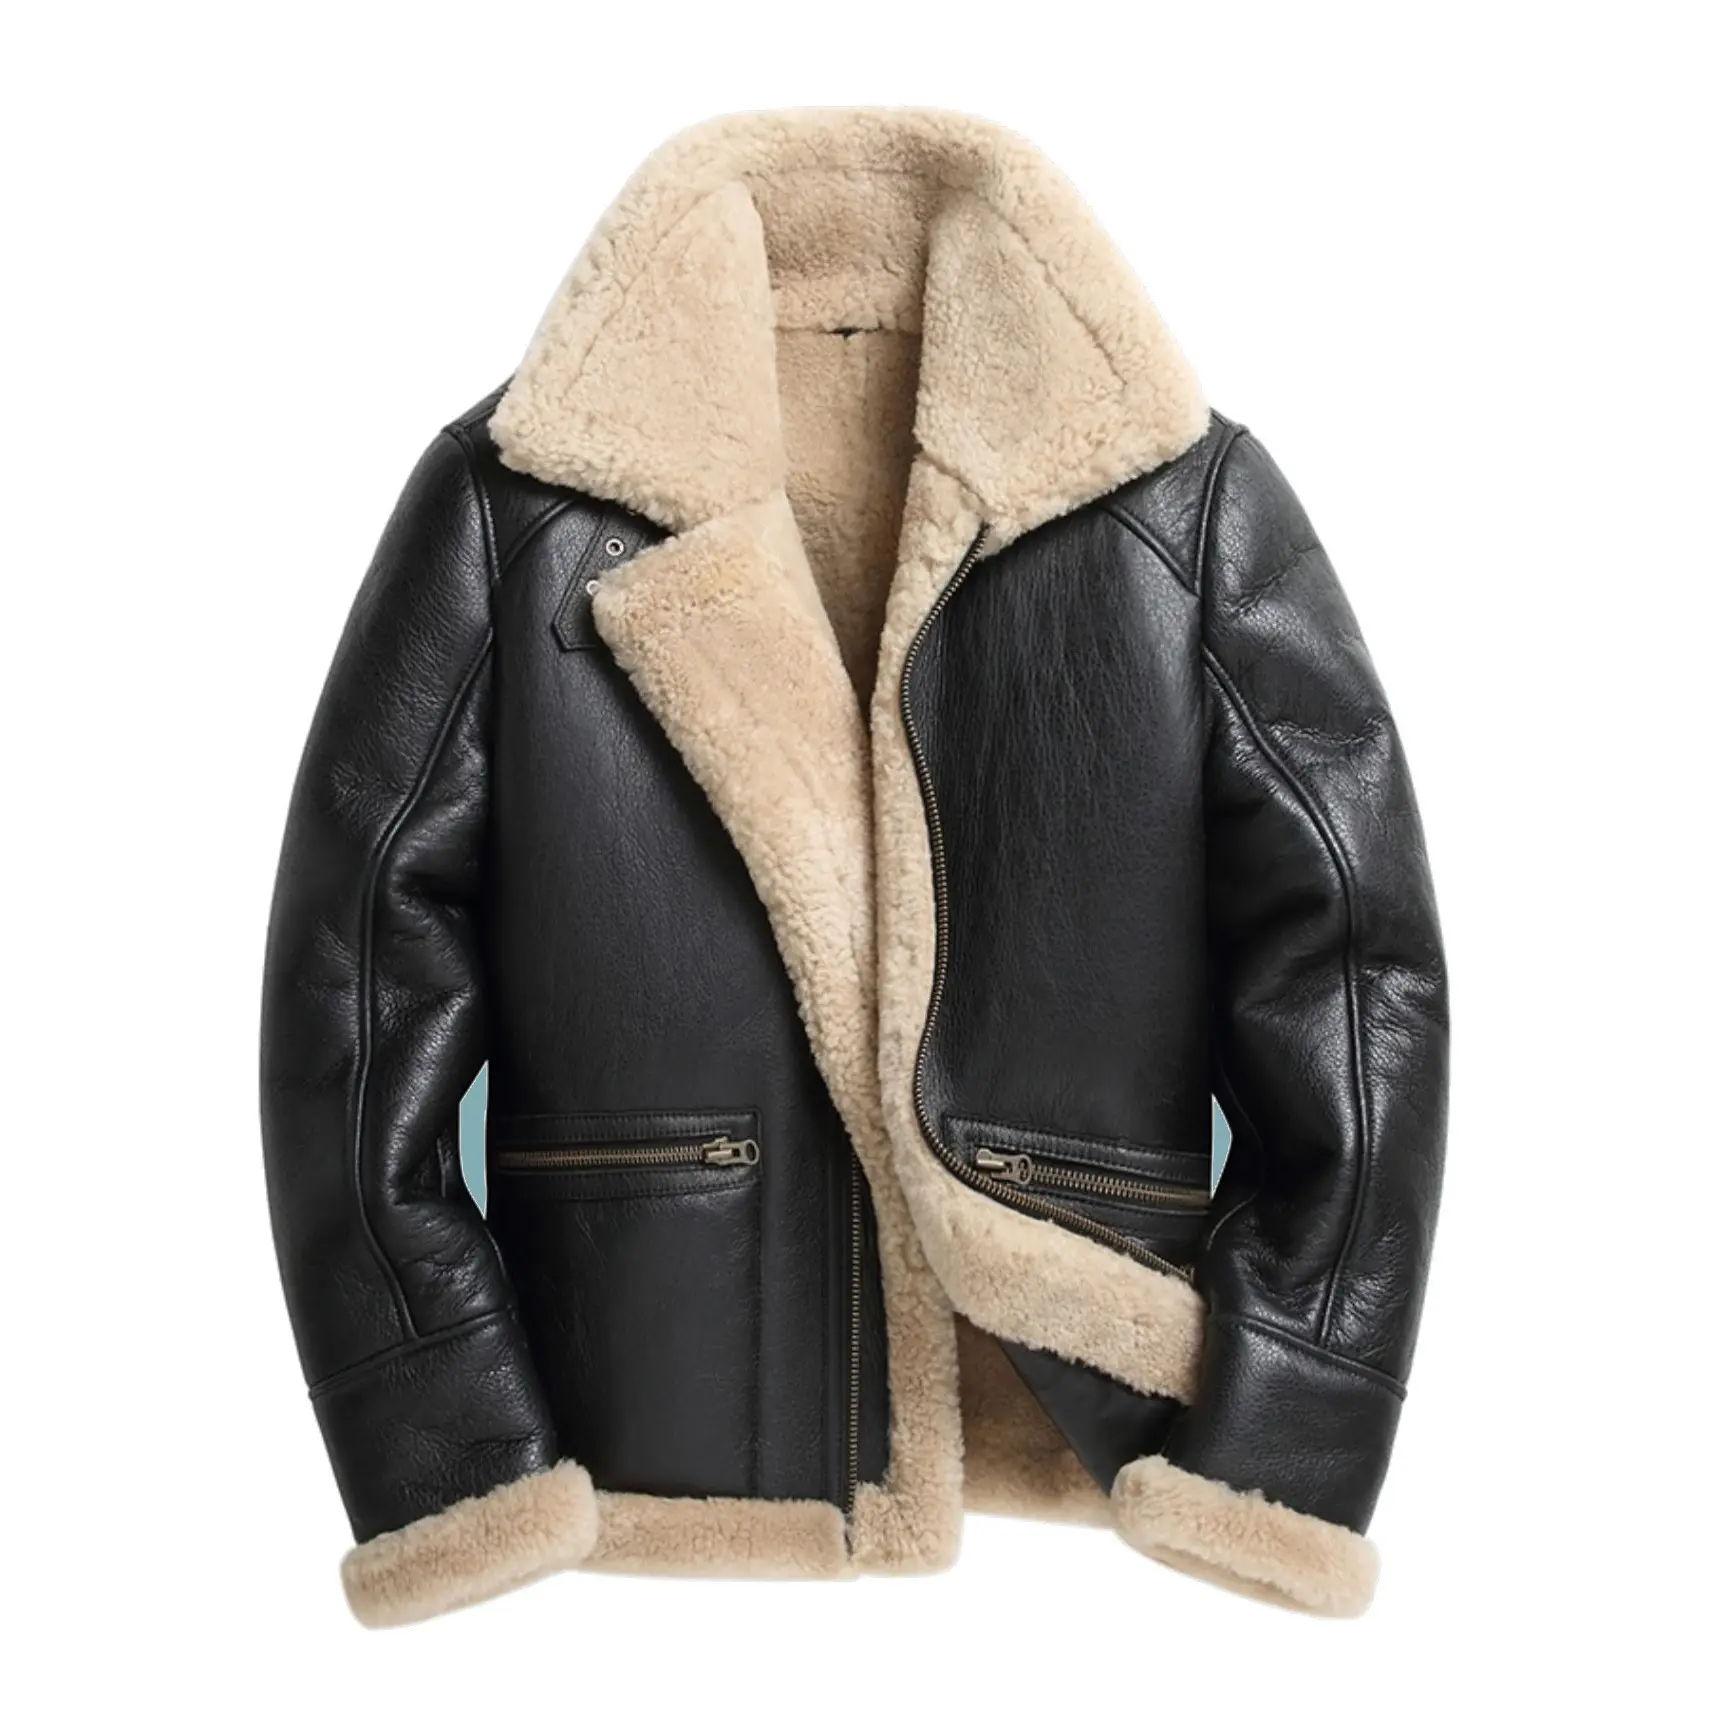 Good quality custom Skin Leather Coat Warm fur leather coats men's winter jackets coats Fashion Jackets